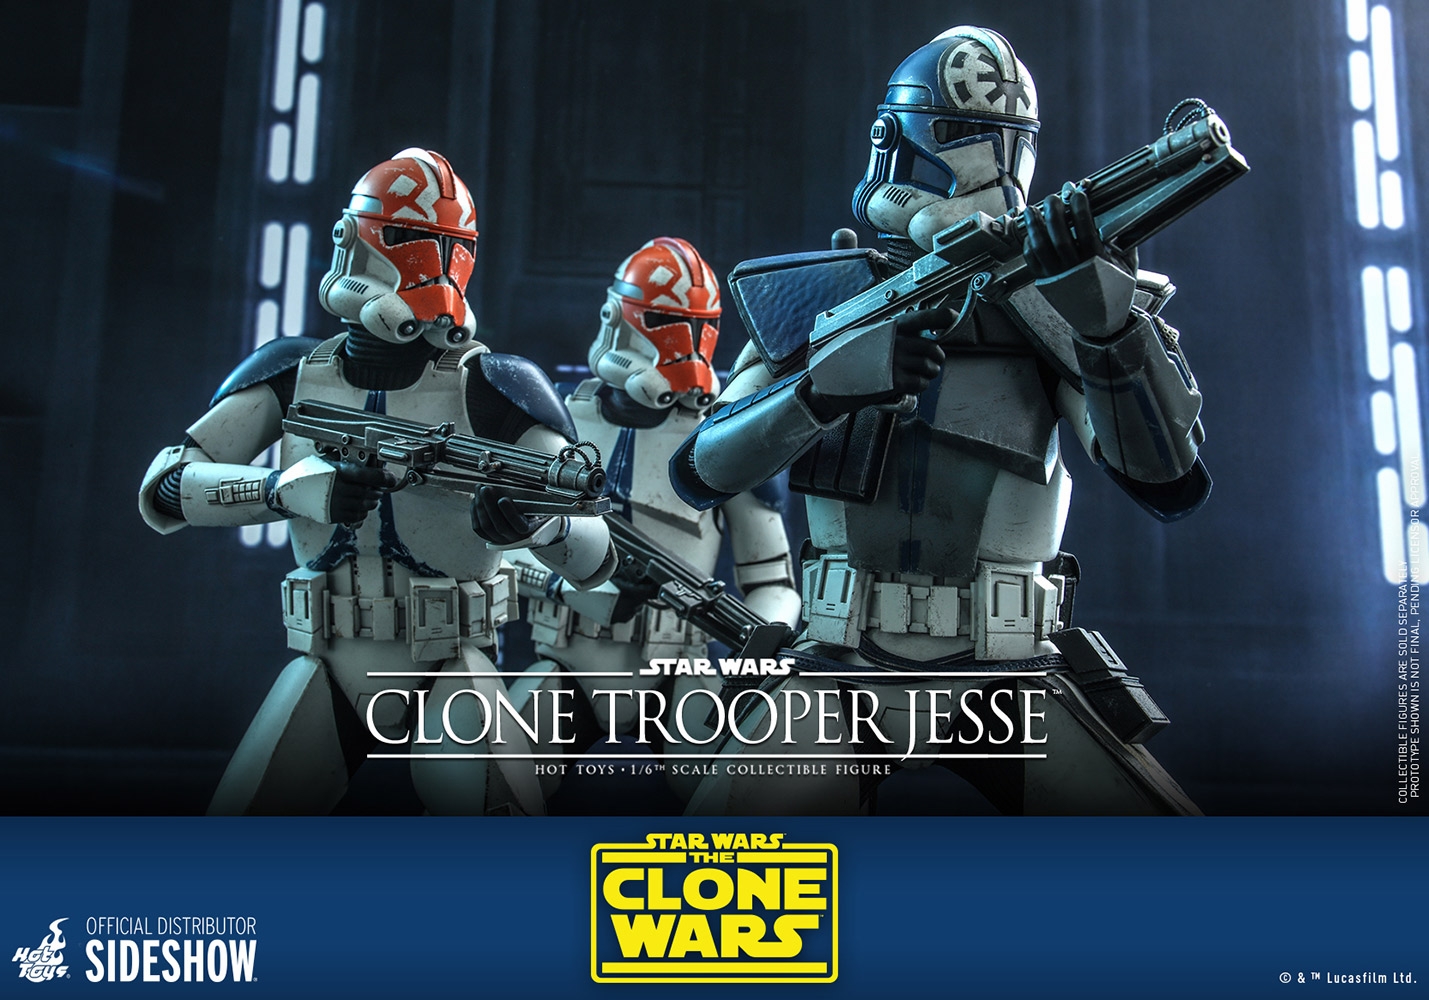 clone-trooper-jesse_star-wars_gallery_61855d9671c36.jpg